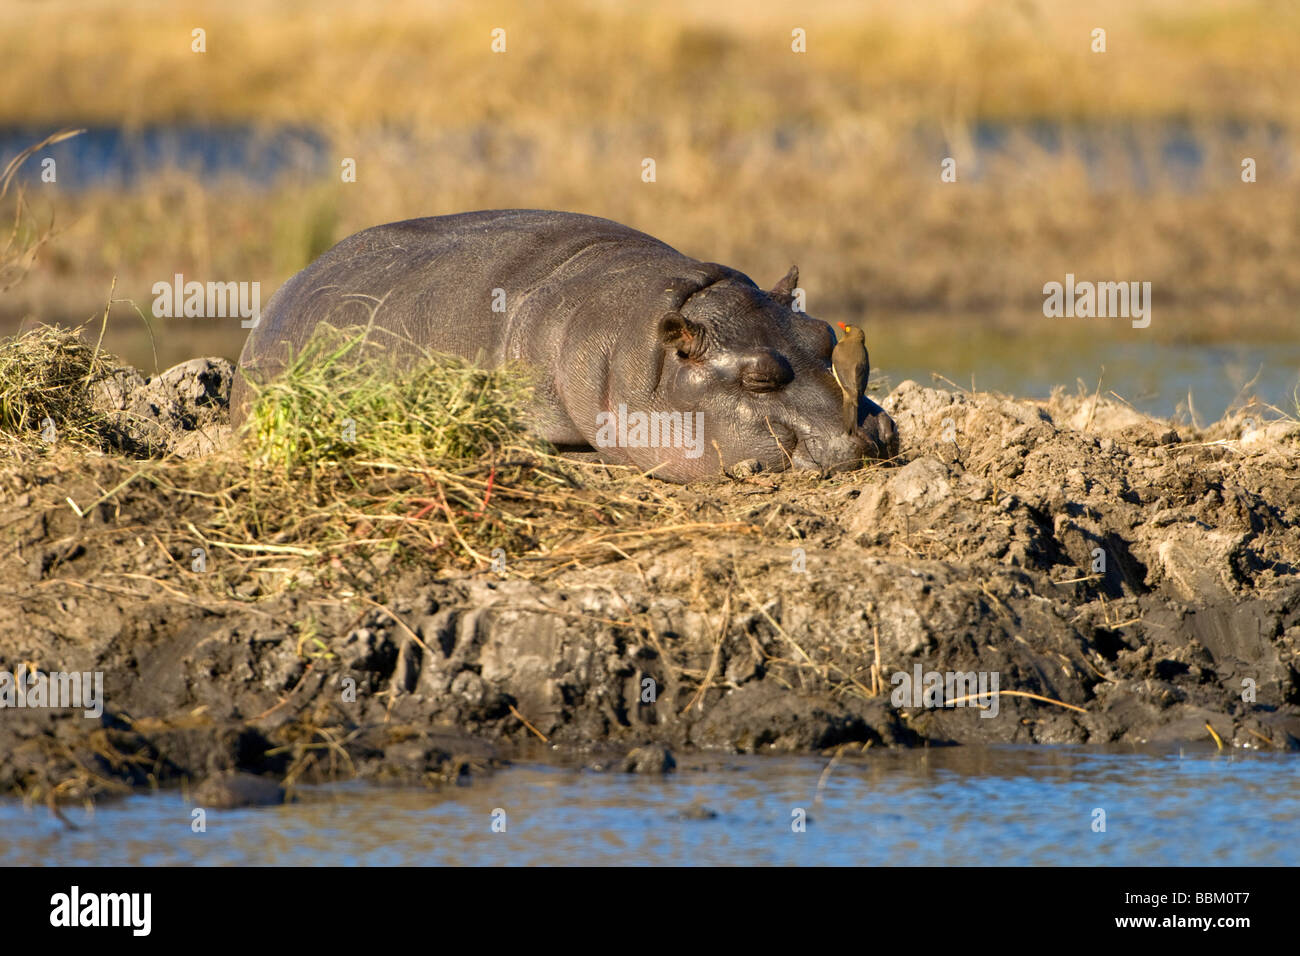 Ippona (Hippopotamus amphibius), giovane animale a prendere il sole, Chobe National Park, Botswana, Africa Foto Stock